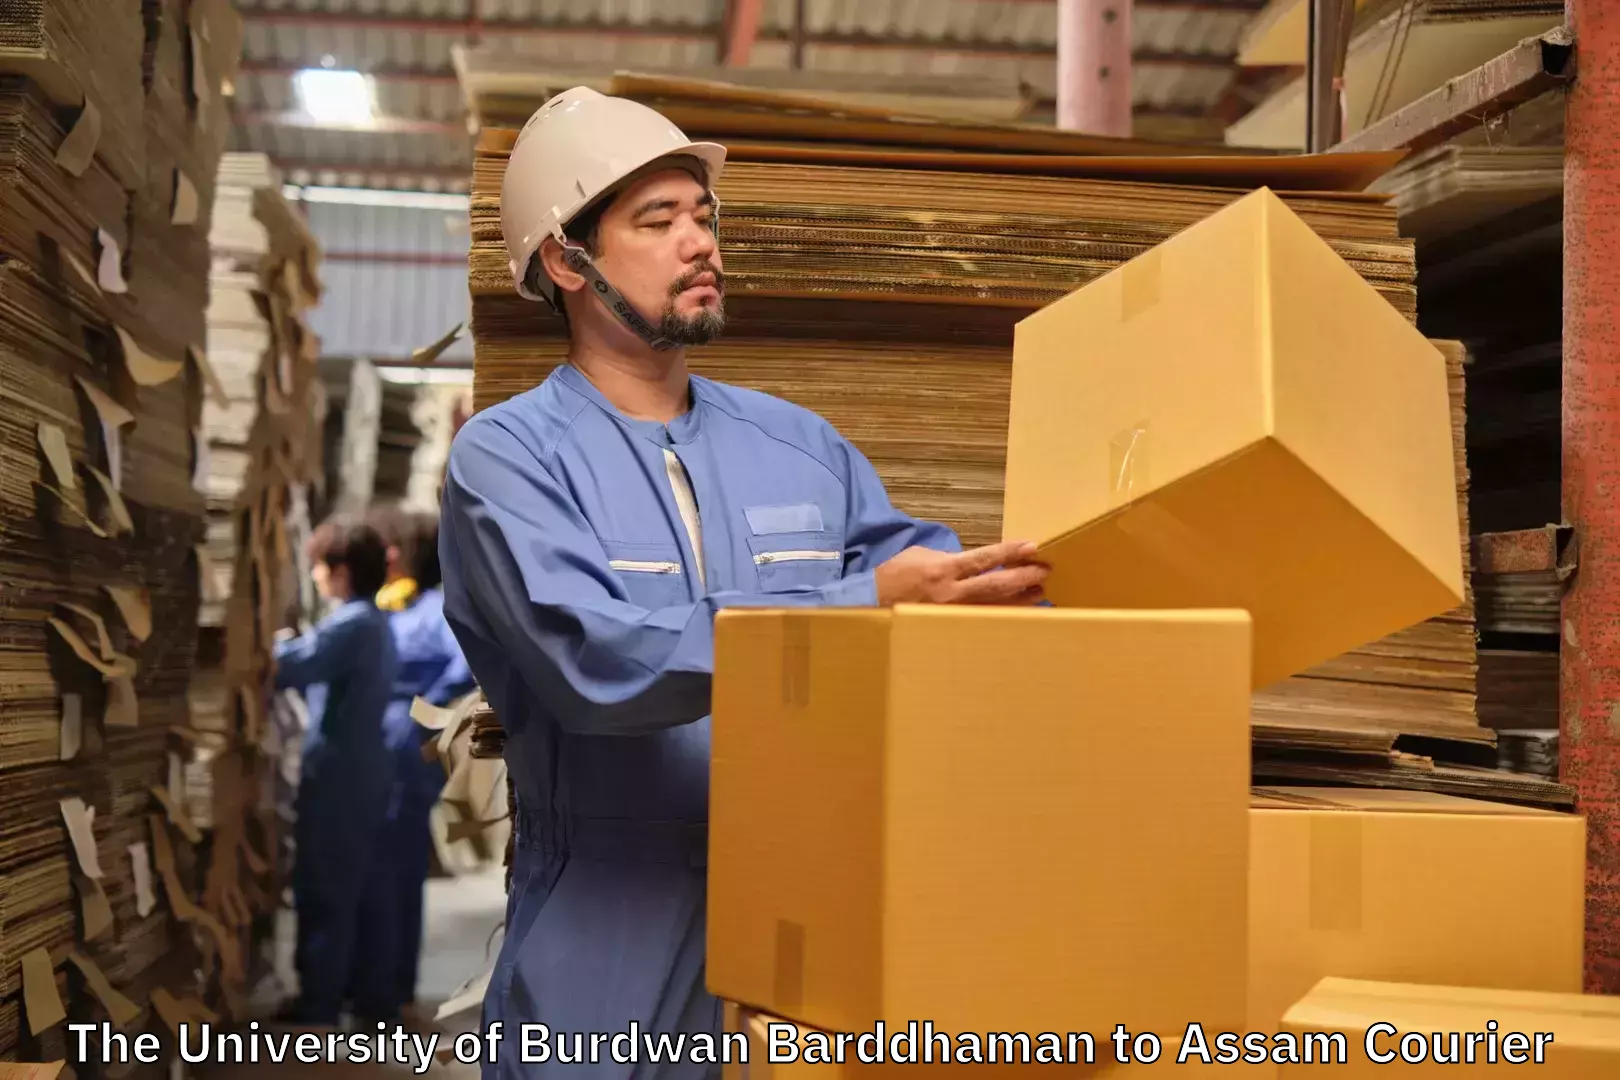 Luggage transfer service The University of Burdwan Barddhaman to Hajo